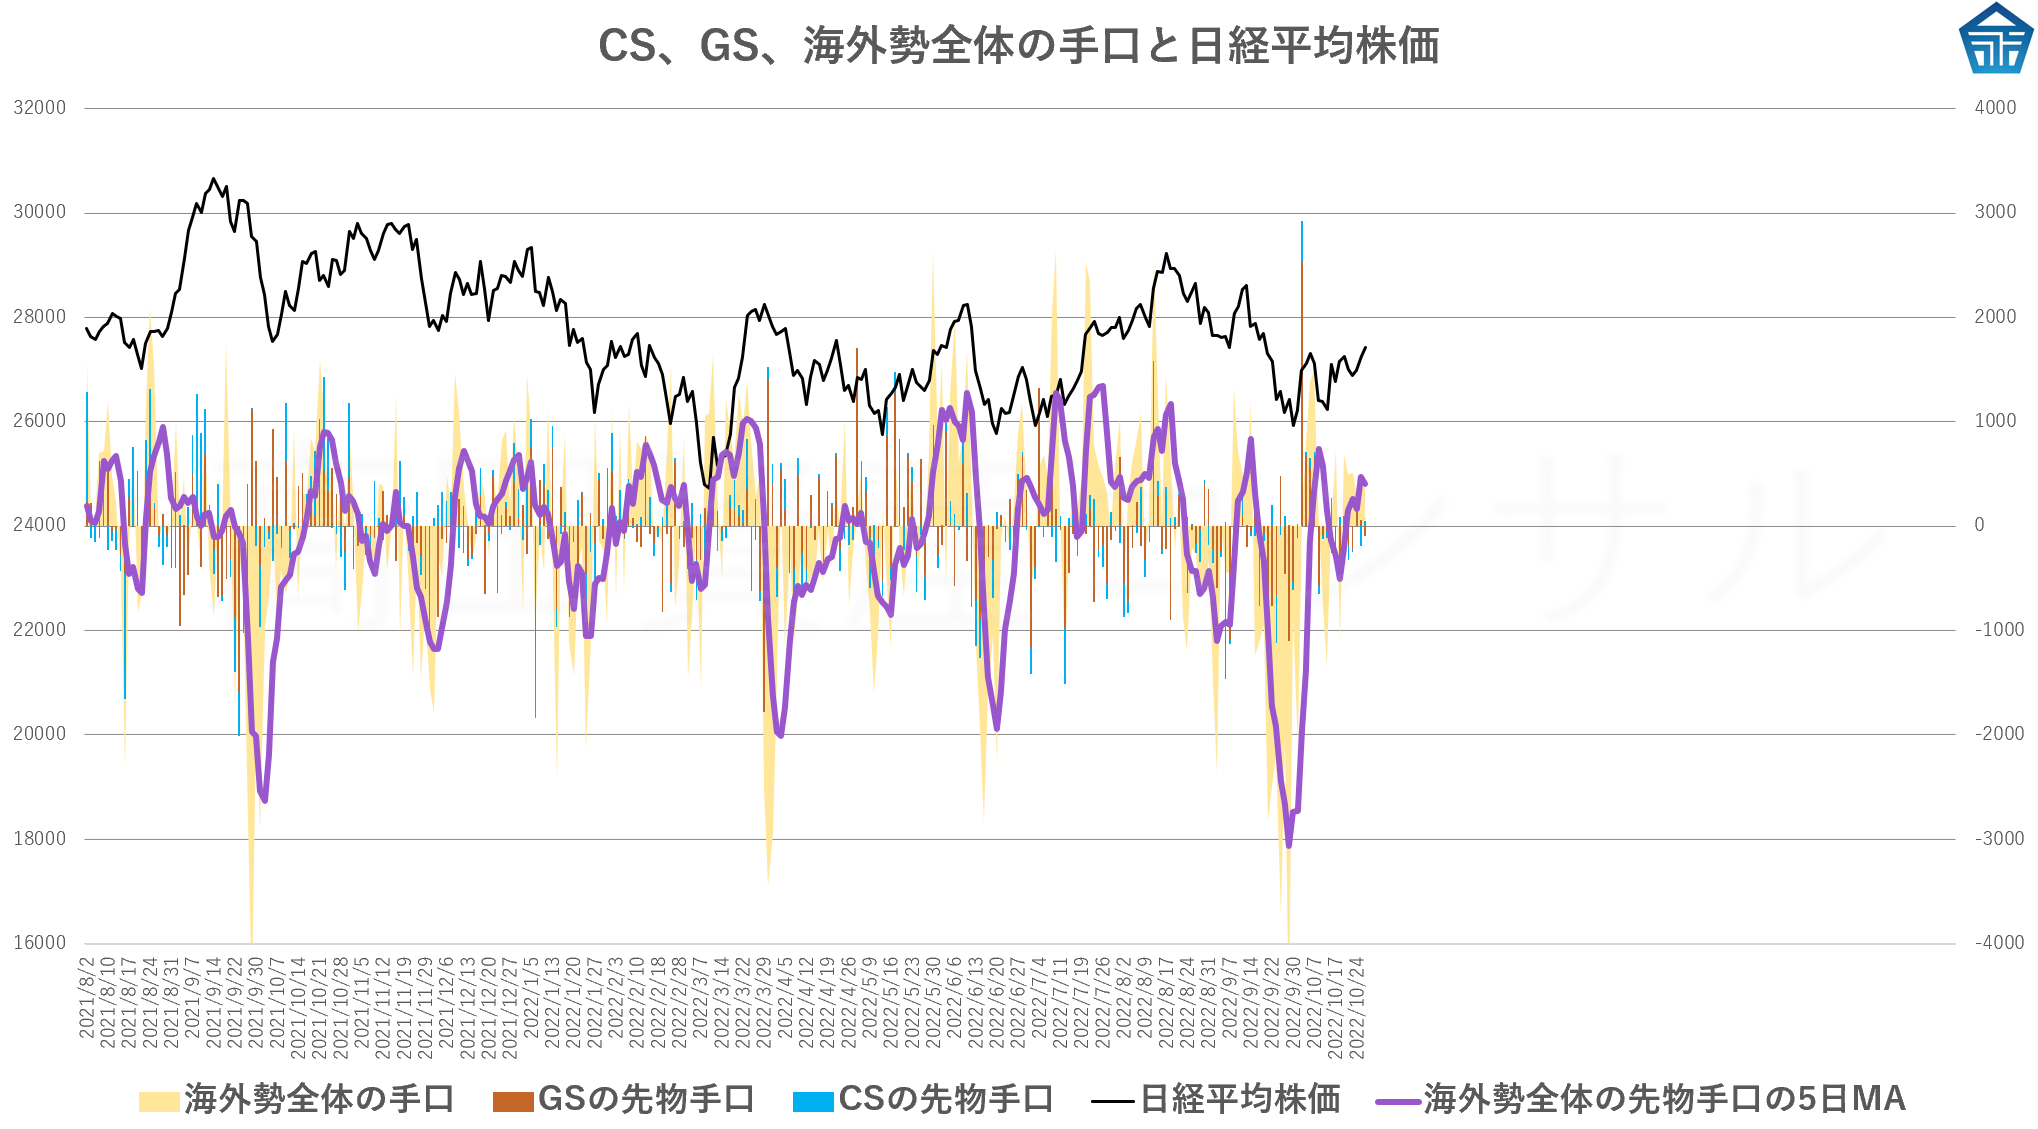 CS、GS、海外勢全体の手口と日経平均株価20221026hihioih778